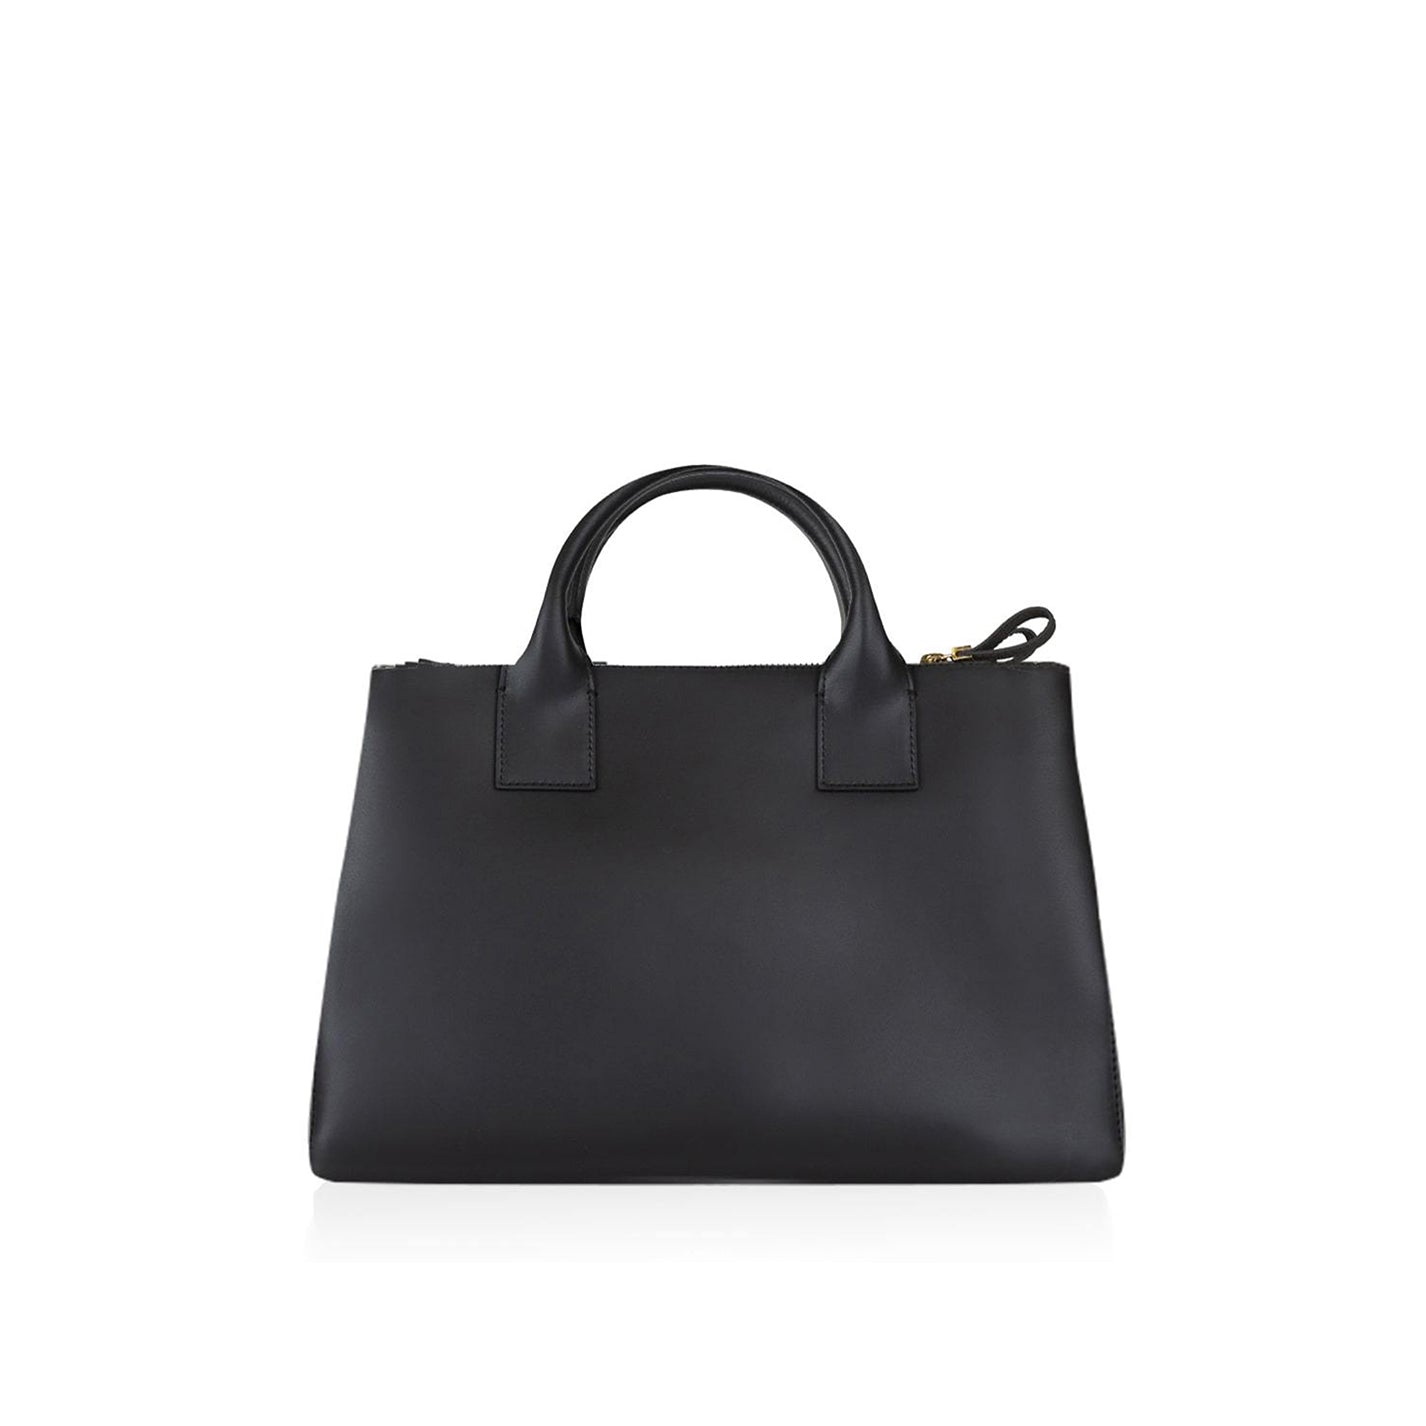 bella-vitello-12-black-leather-bag-back